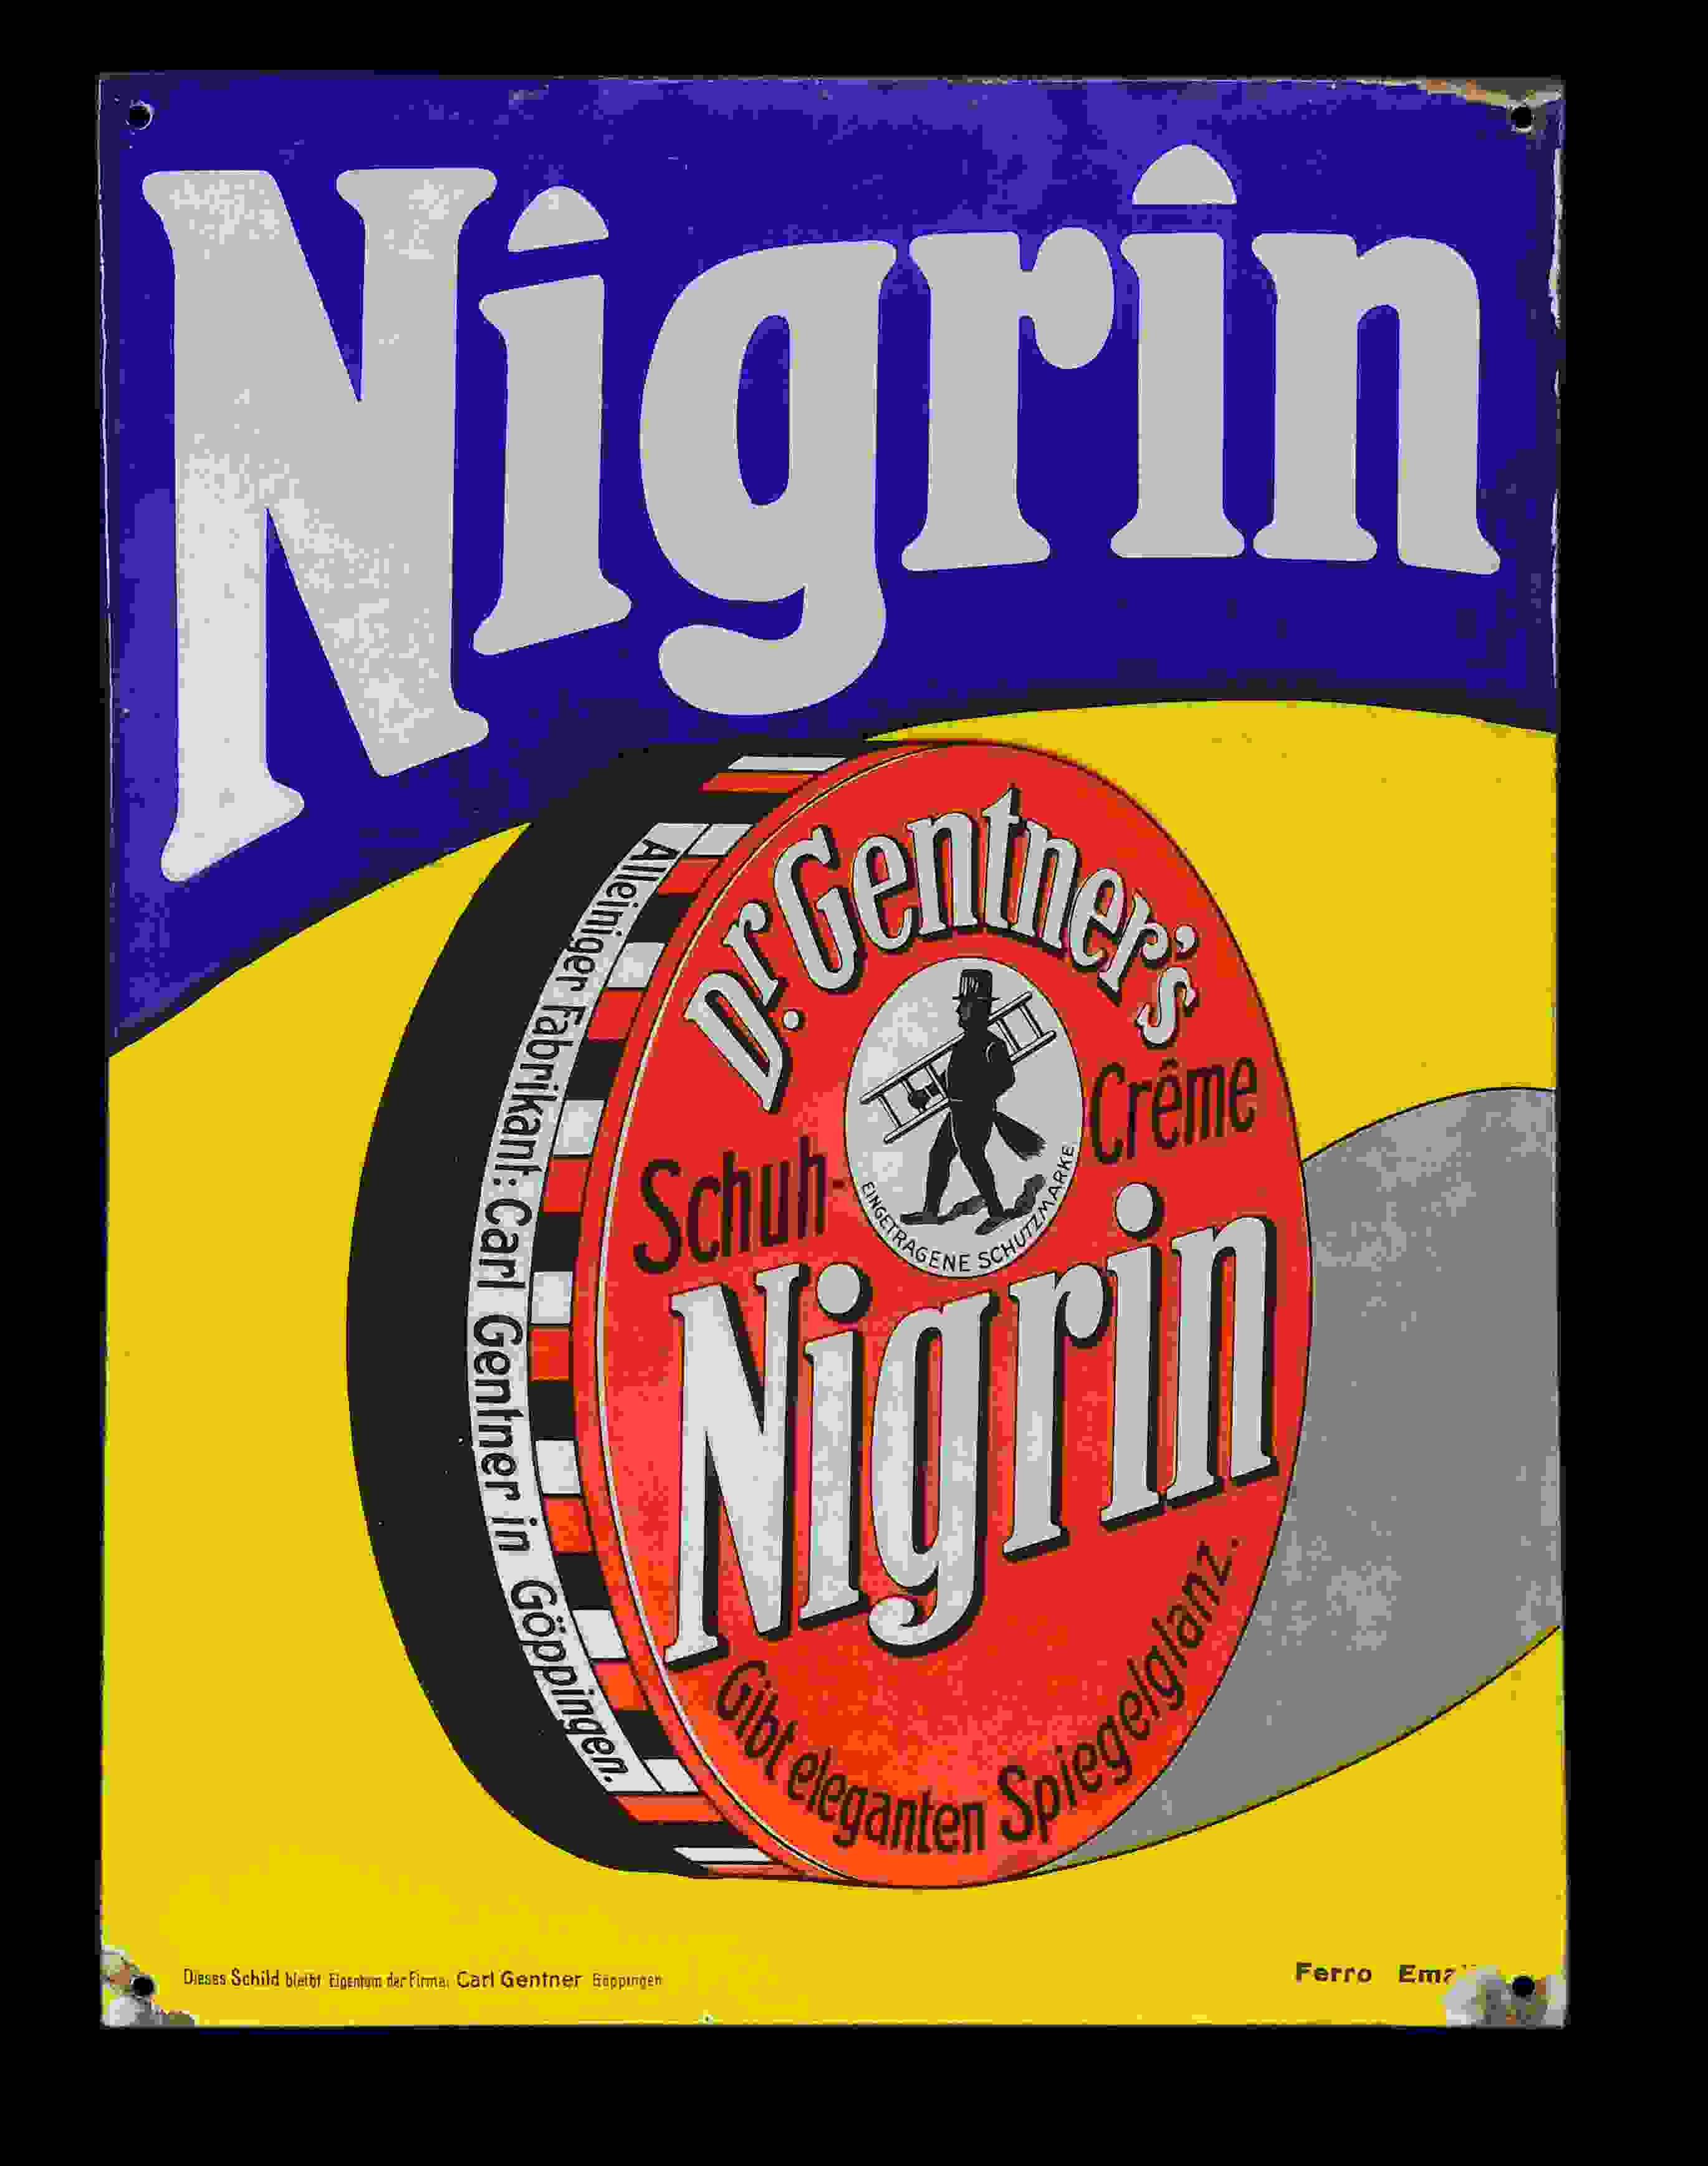 Nigrin 